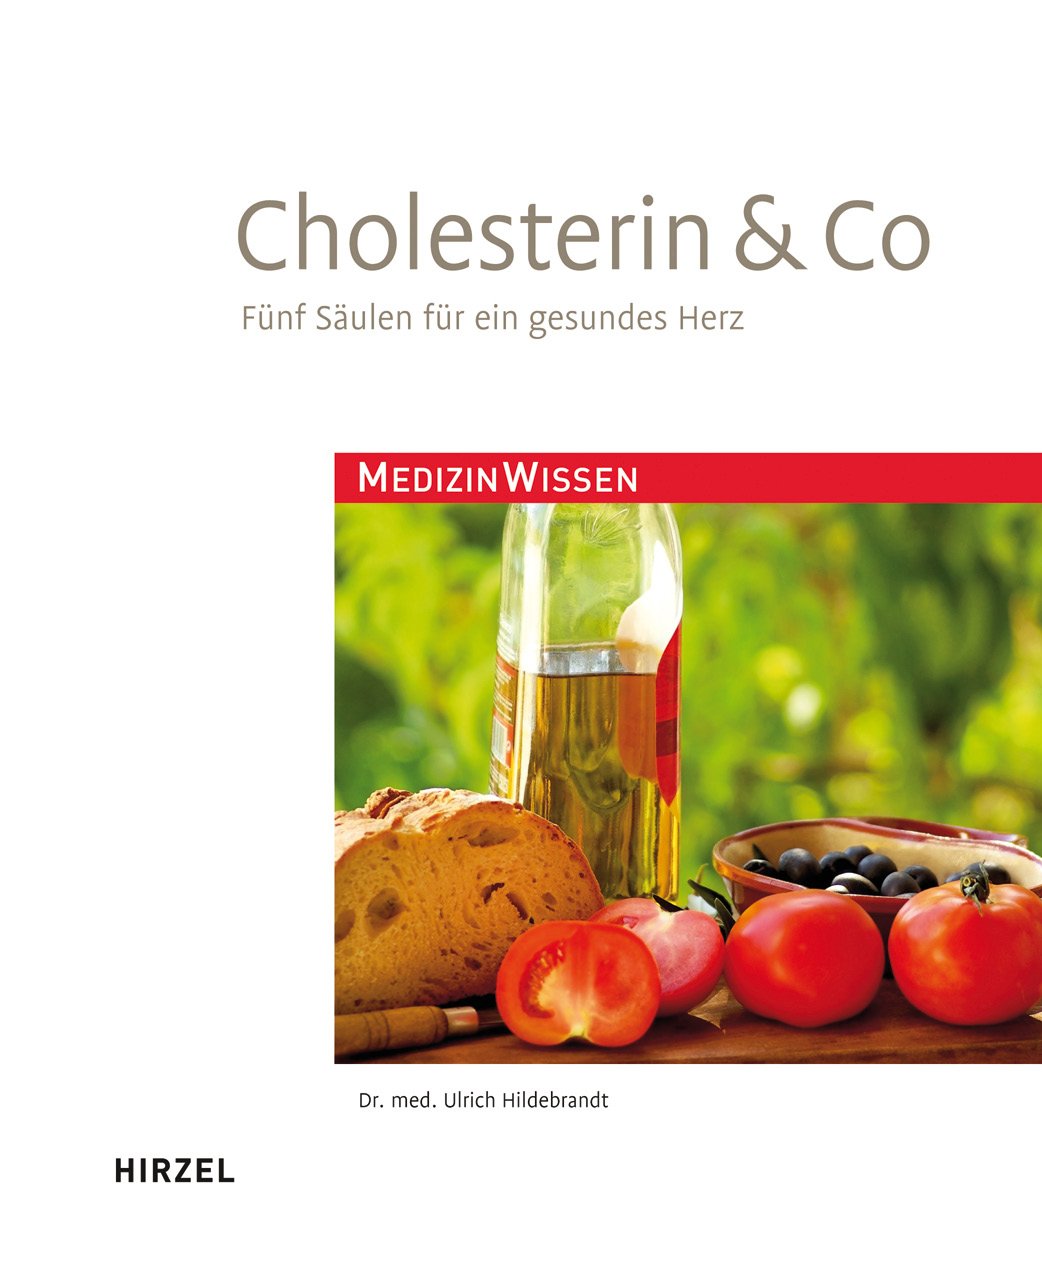 Cholesterin & Co